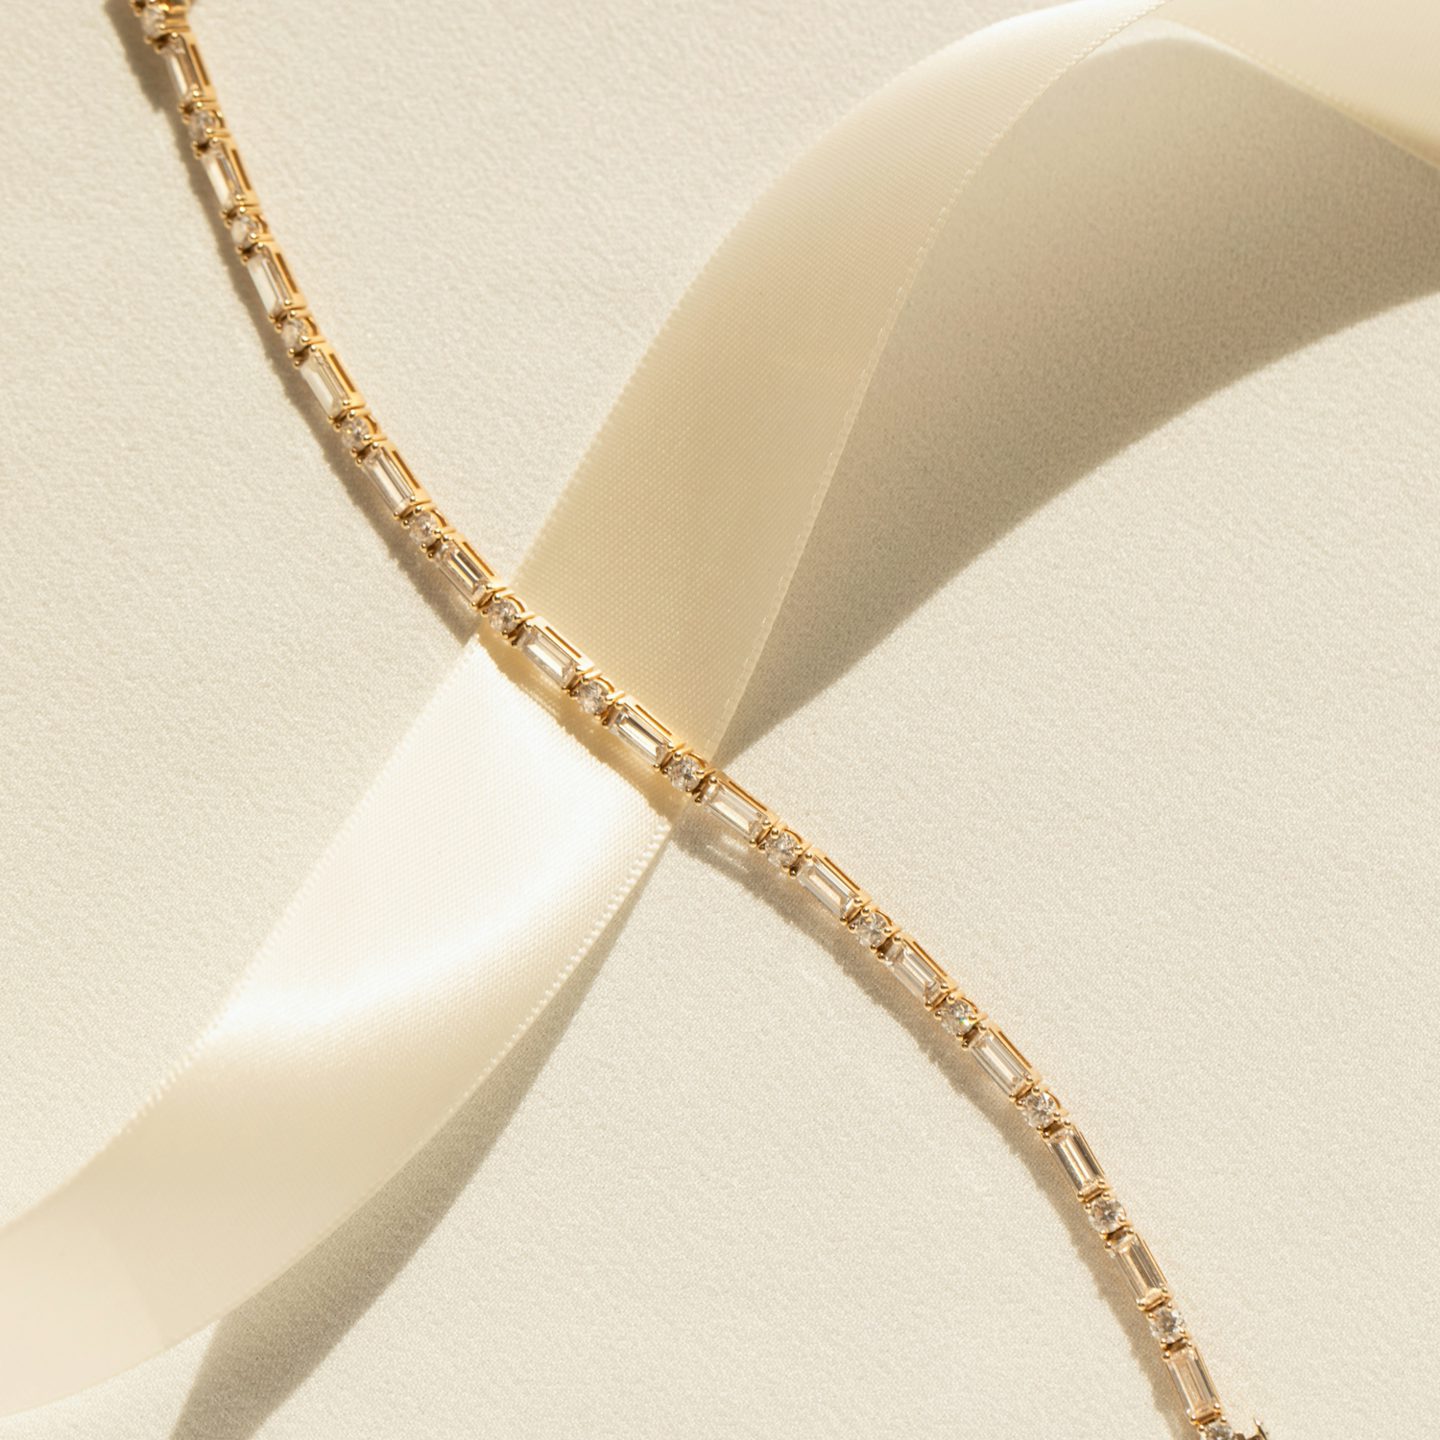 Mixed Shape Bracelet | Round Brilliant and Baguette | 14k | 18k White Gold | Chain length: 6.5 | Diamond size: Original